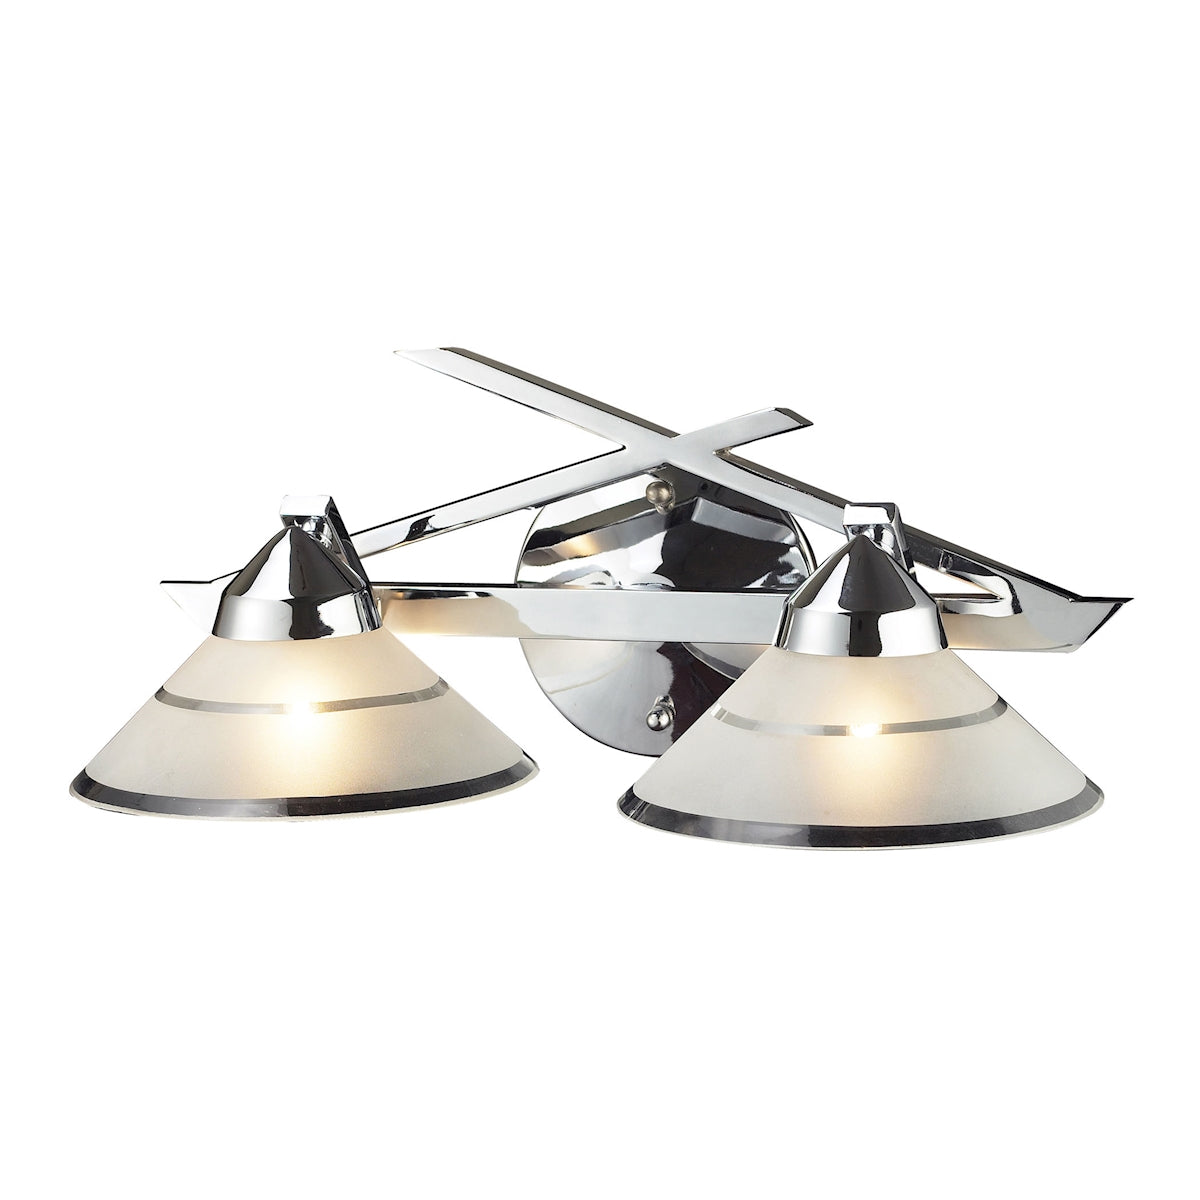 ELK Lighting 1471/2 Refraction 2-Light Vanity Lamp in Polished Chrome with Banded Satin Glass